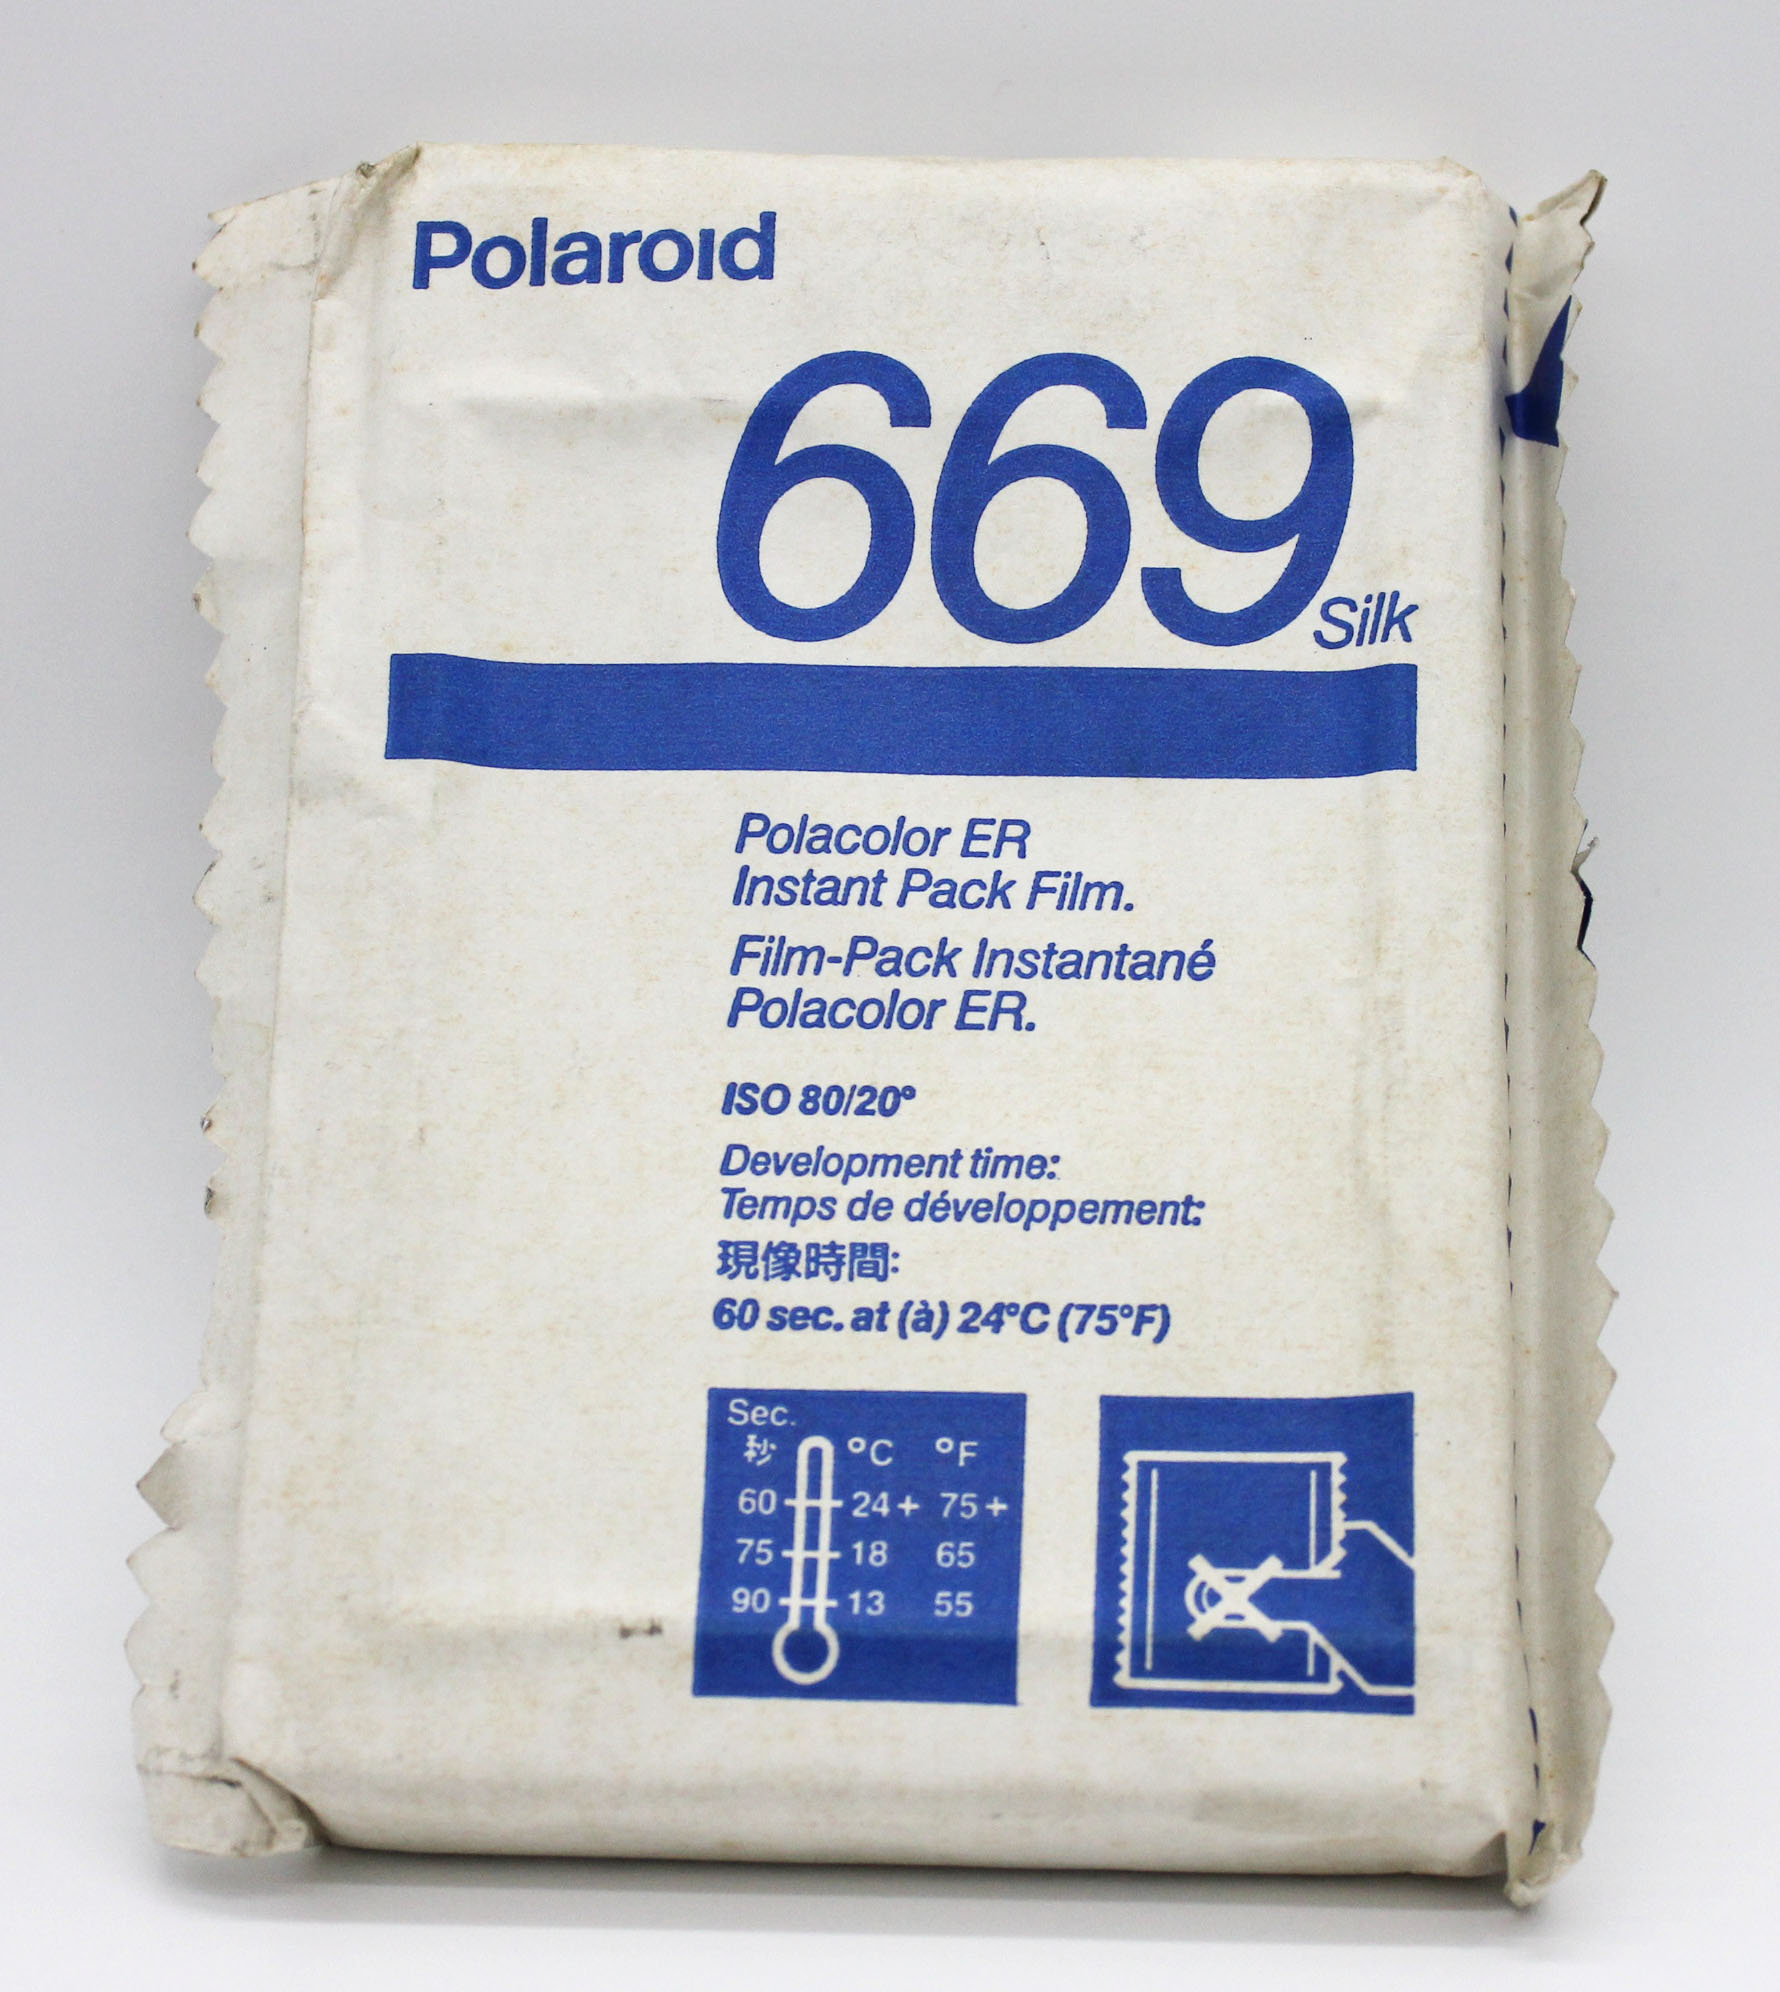 [Unused] Polaroid 669 Silk Polacolor ER Instant Pack Film Expired 12/1991 from Japan